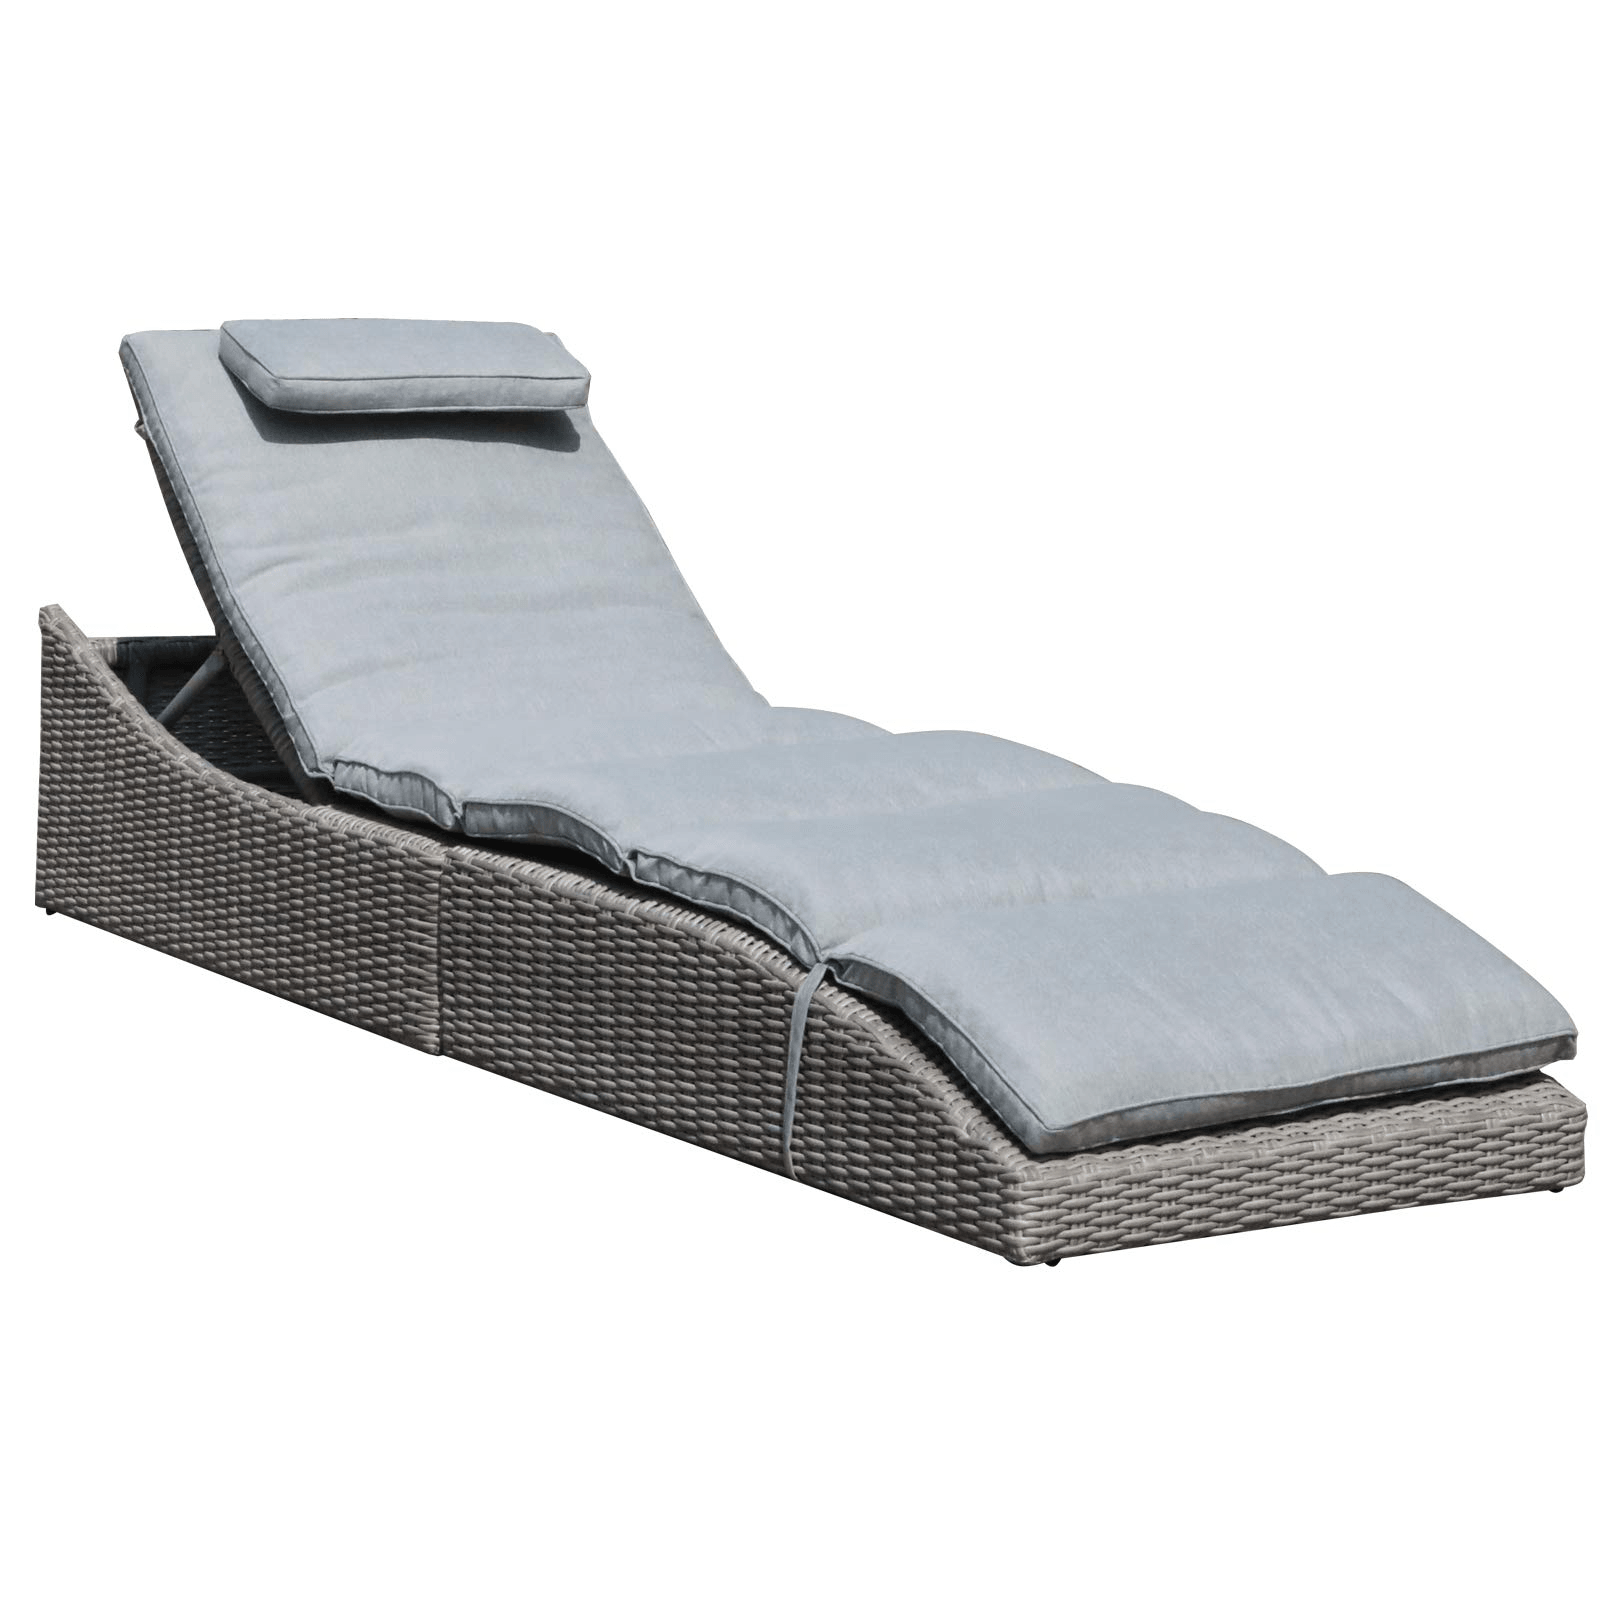 1pc Folding Patio Lounge Chairs with Light Grey Cushion, Wave Shape